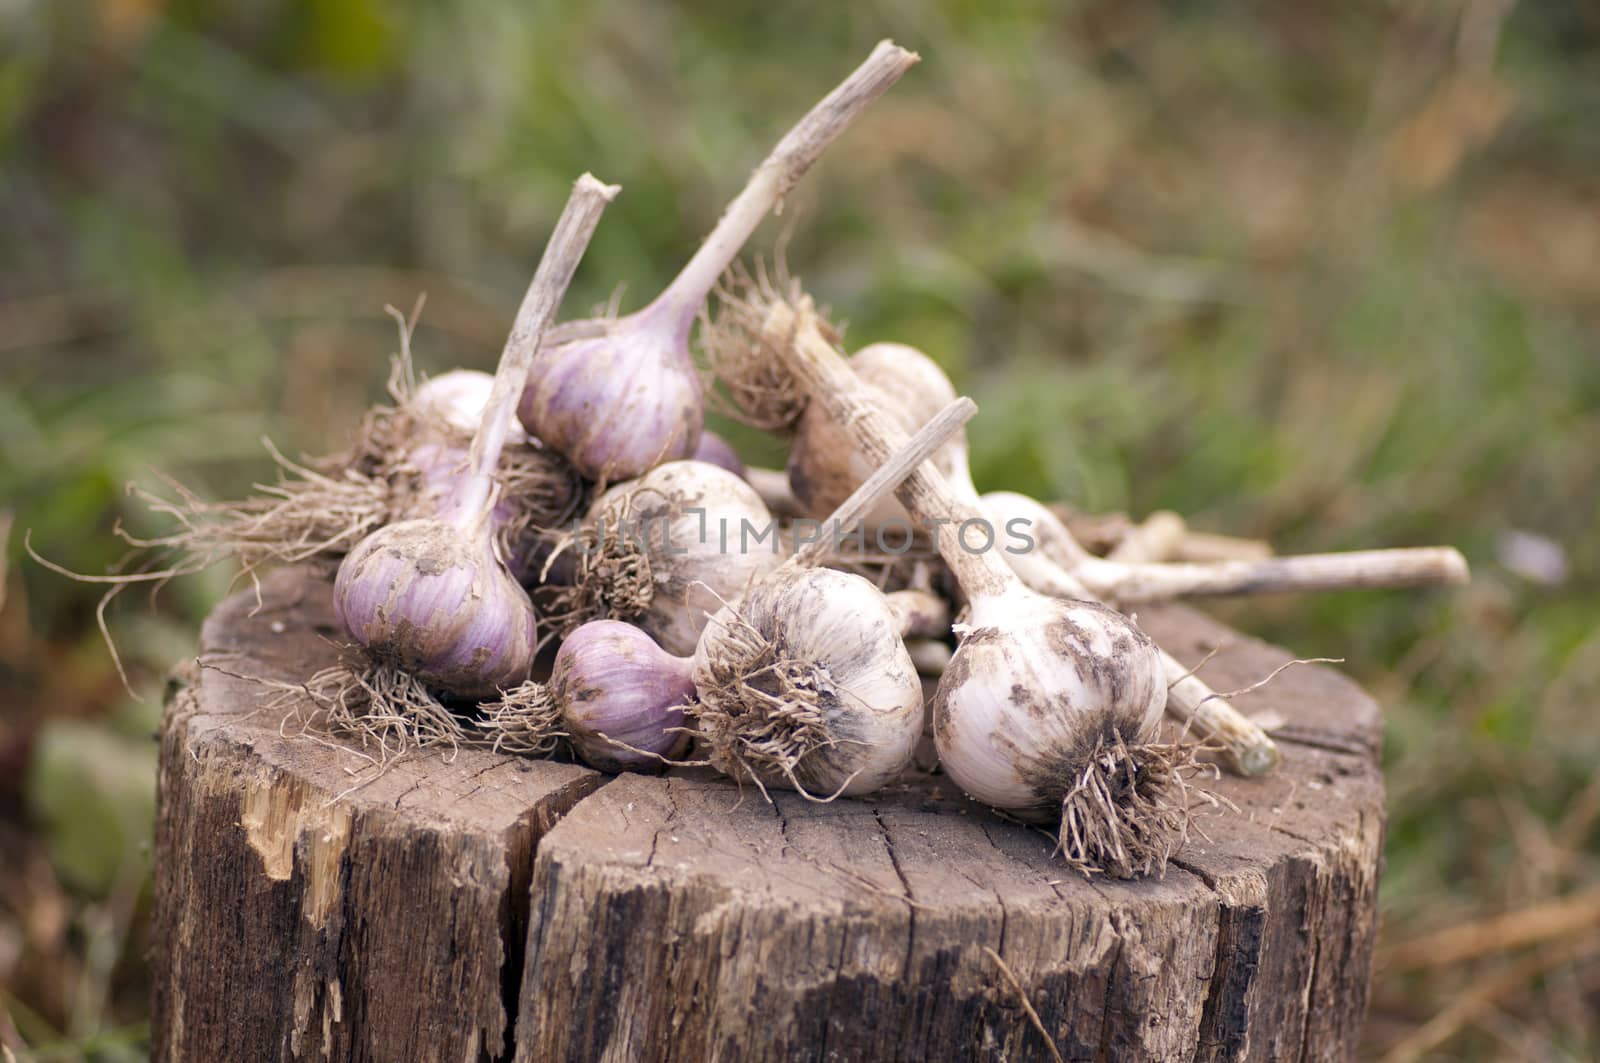 Ripe organic garlic on stump